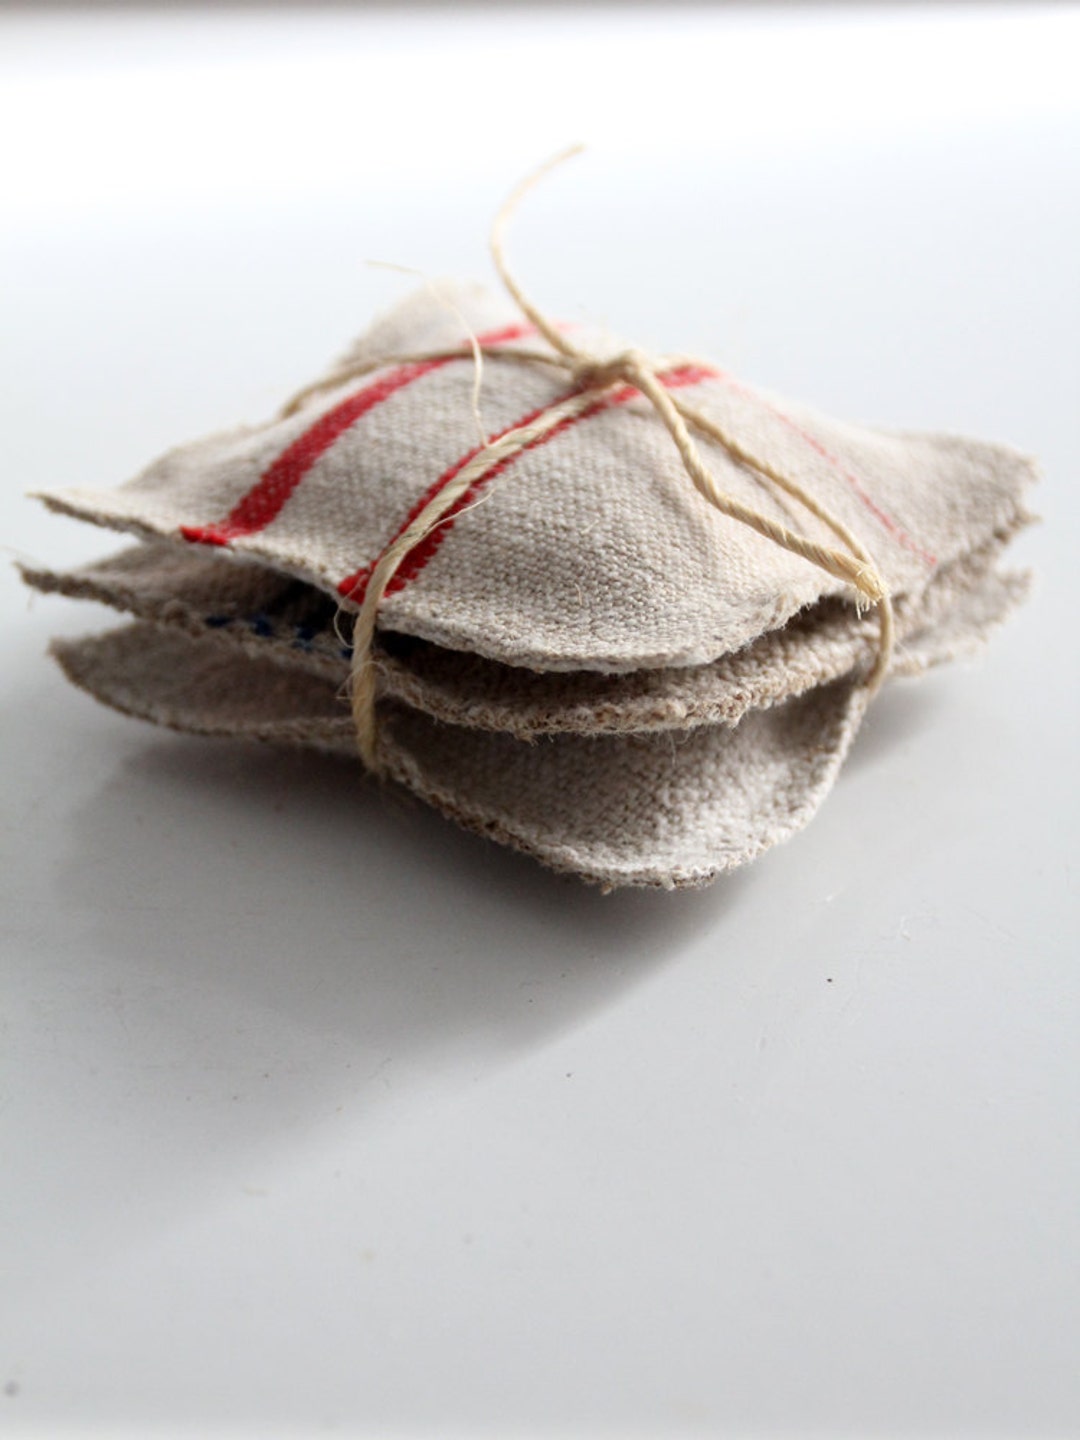 Herbal Moth Repellent Sachets - Homespun Seasonal Living